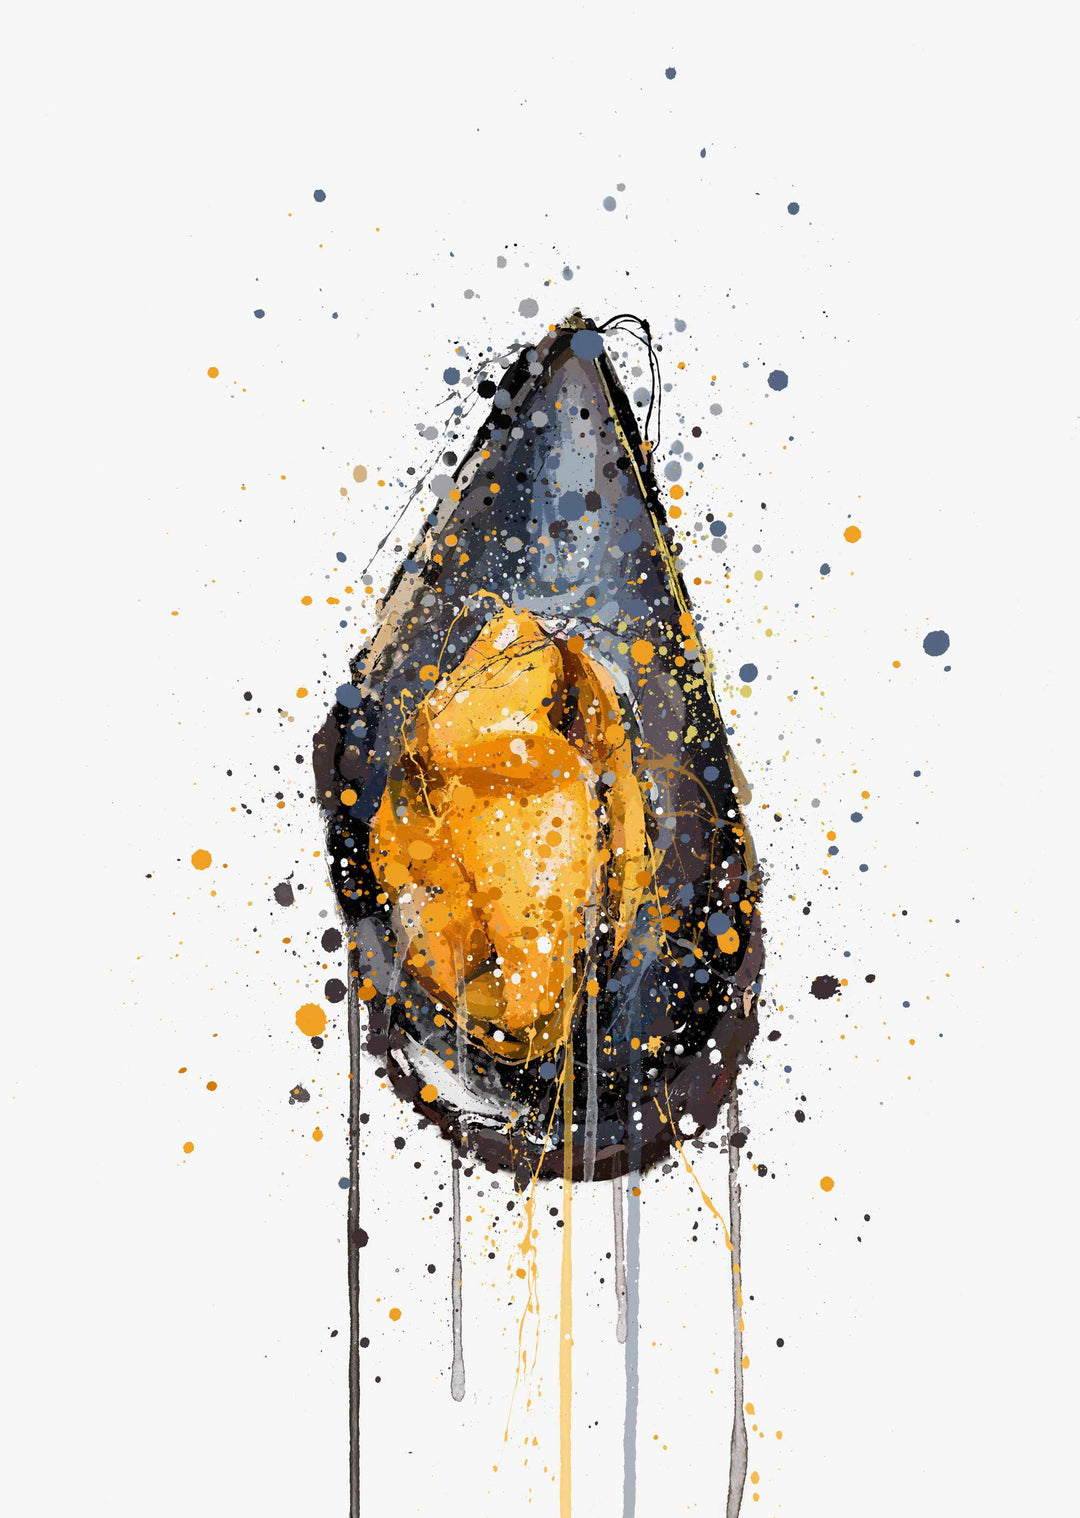 Seafood Wall Art Print 'Mussel'-We Love Prints